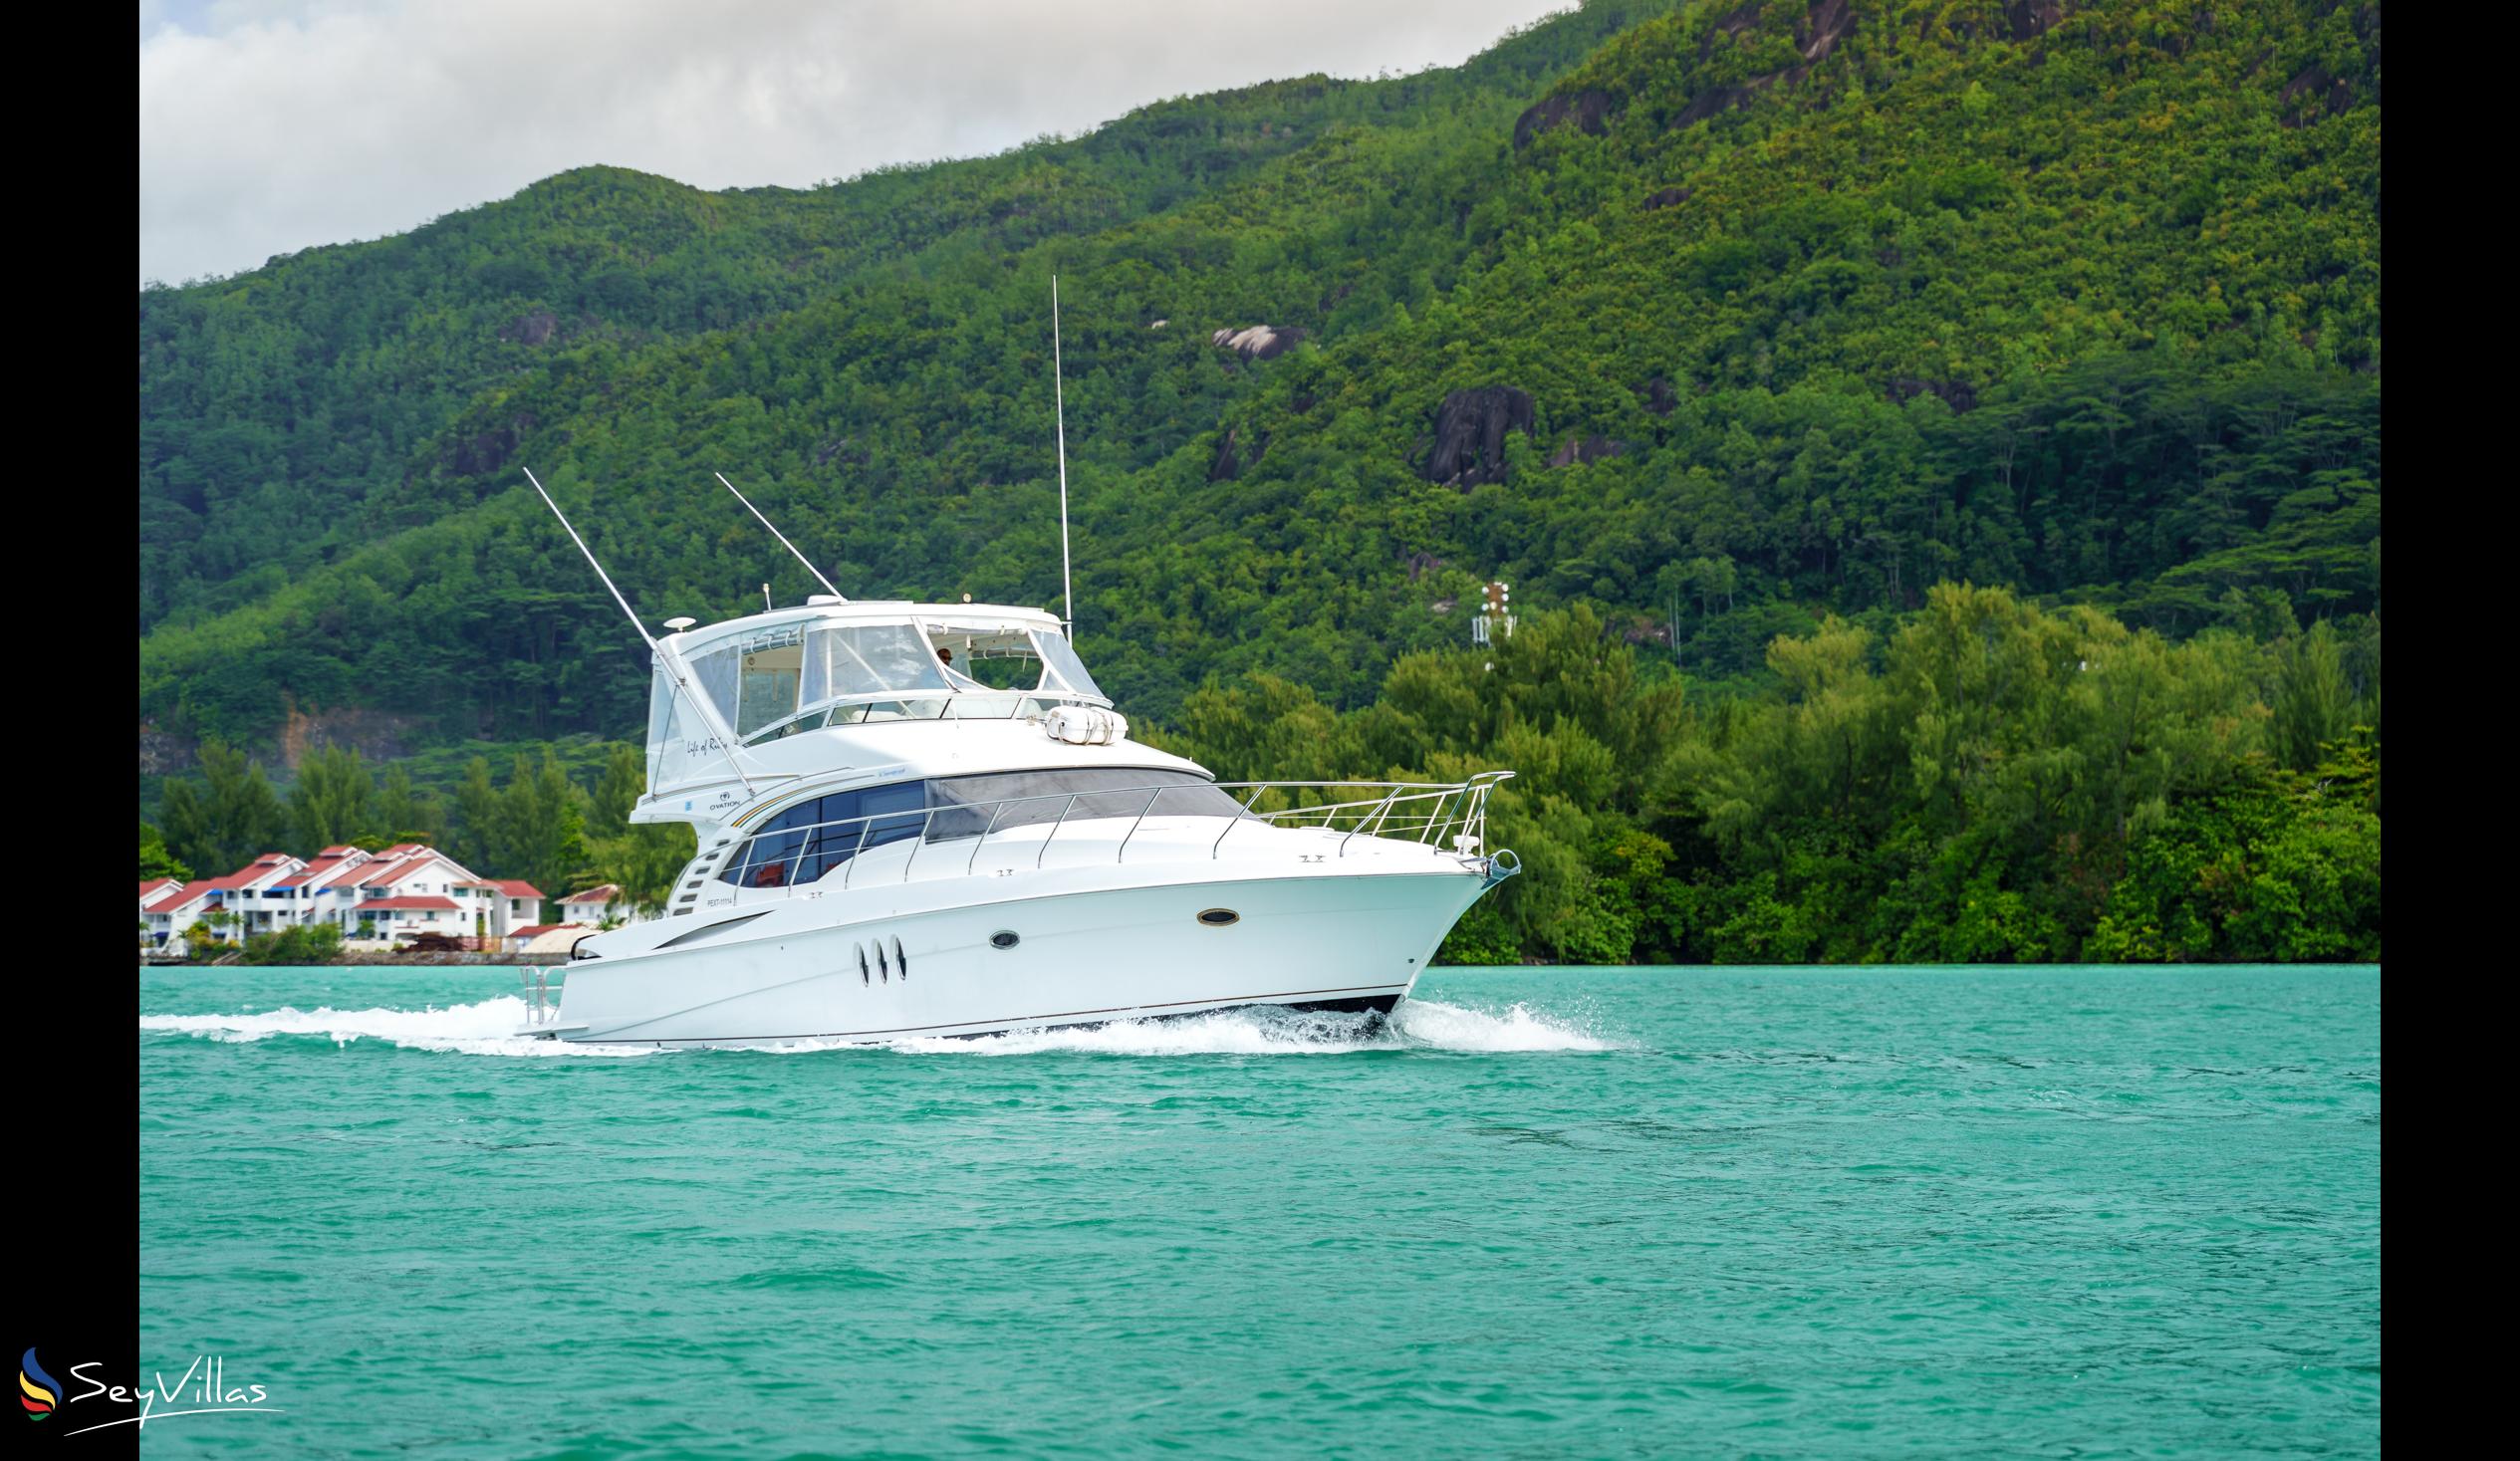 Foto 41: Seyscapes Yacht Charter - Vollcharter Life of Riley - Seychellen (Seychellen)